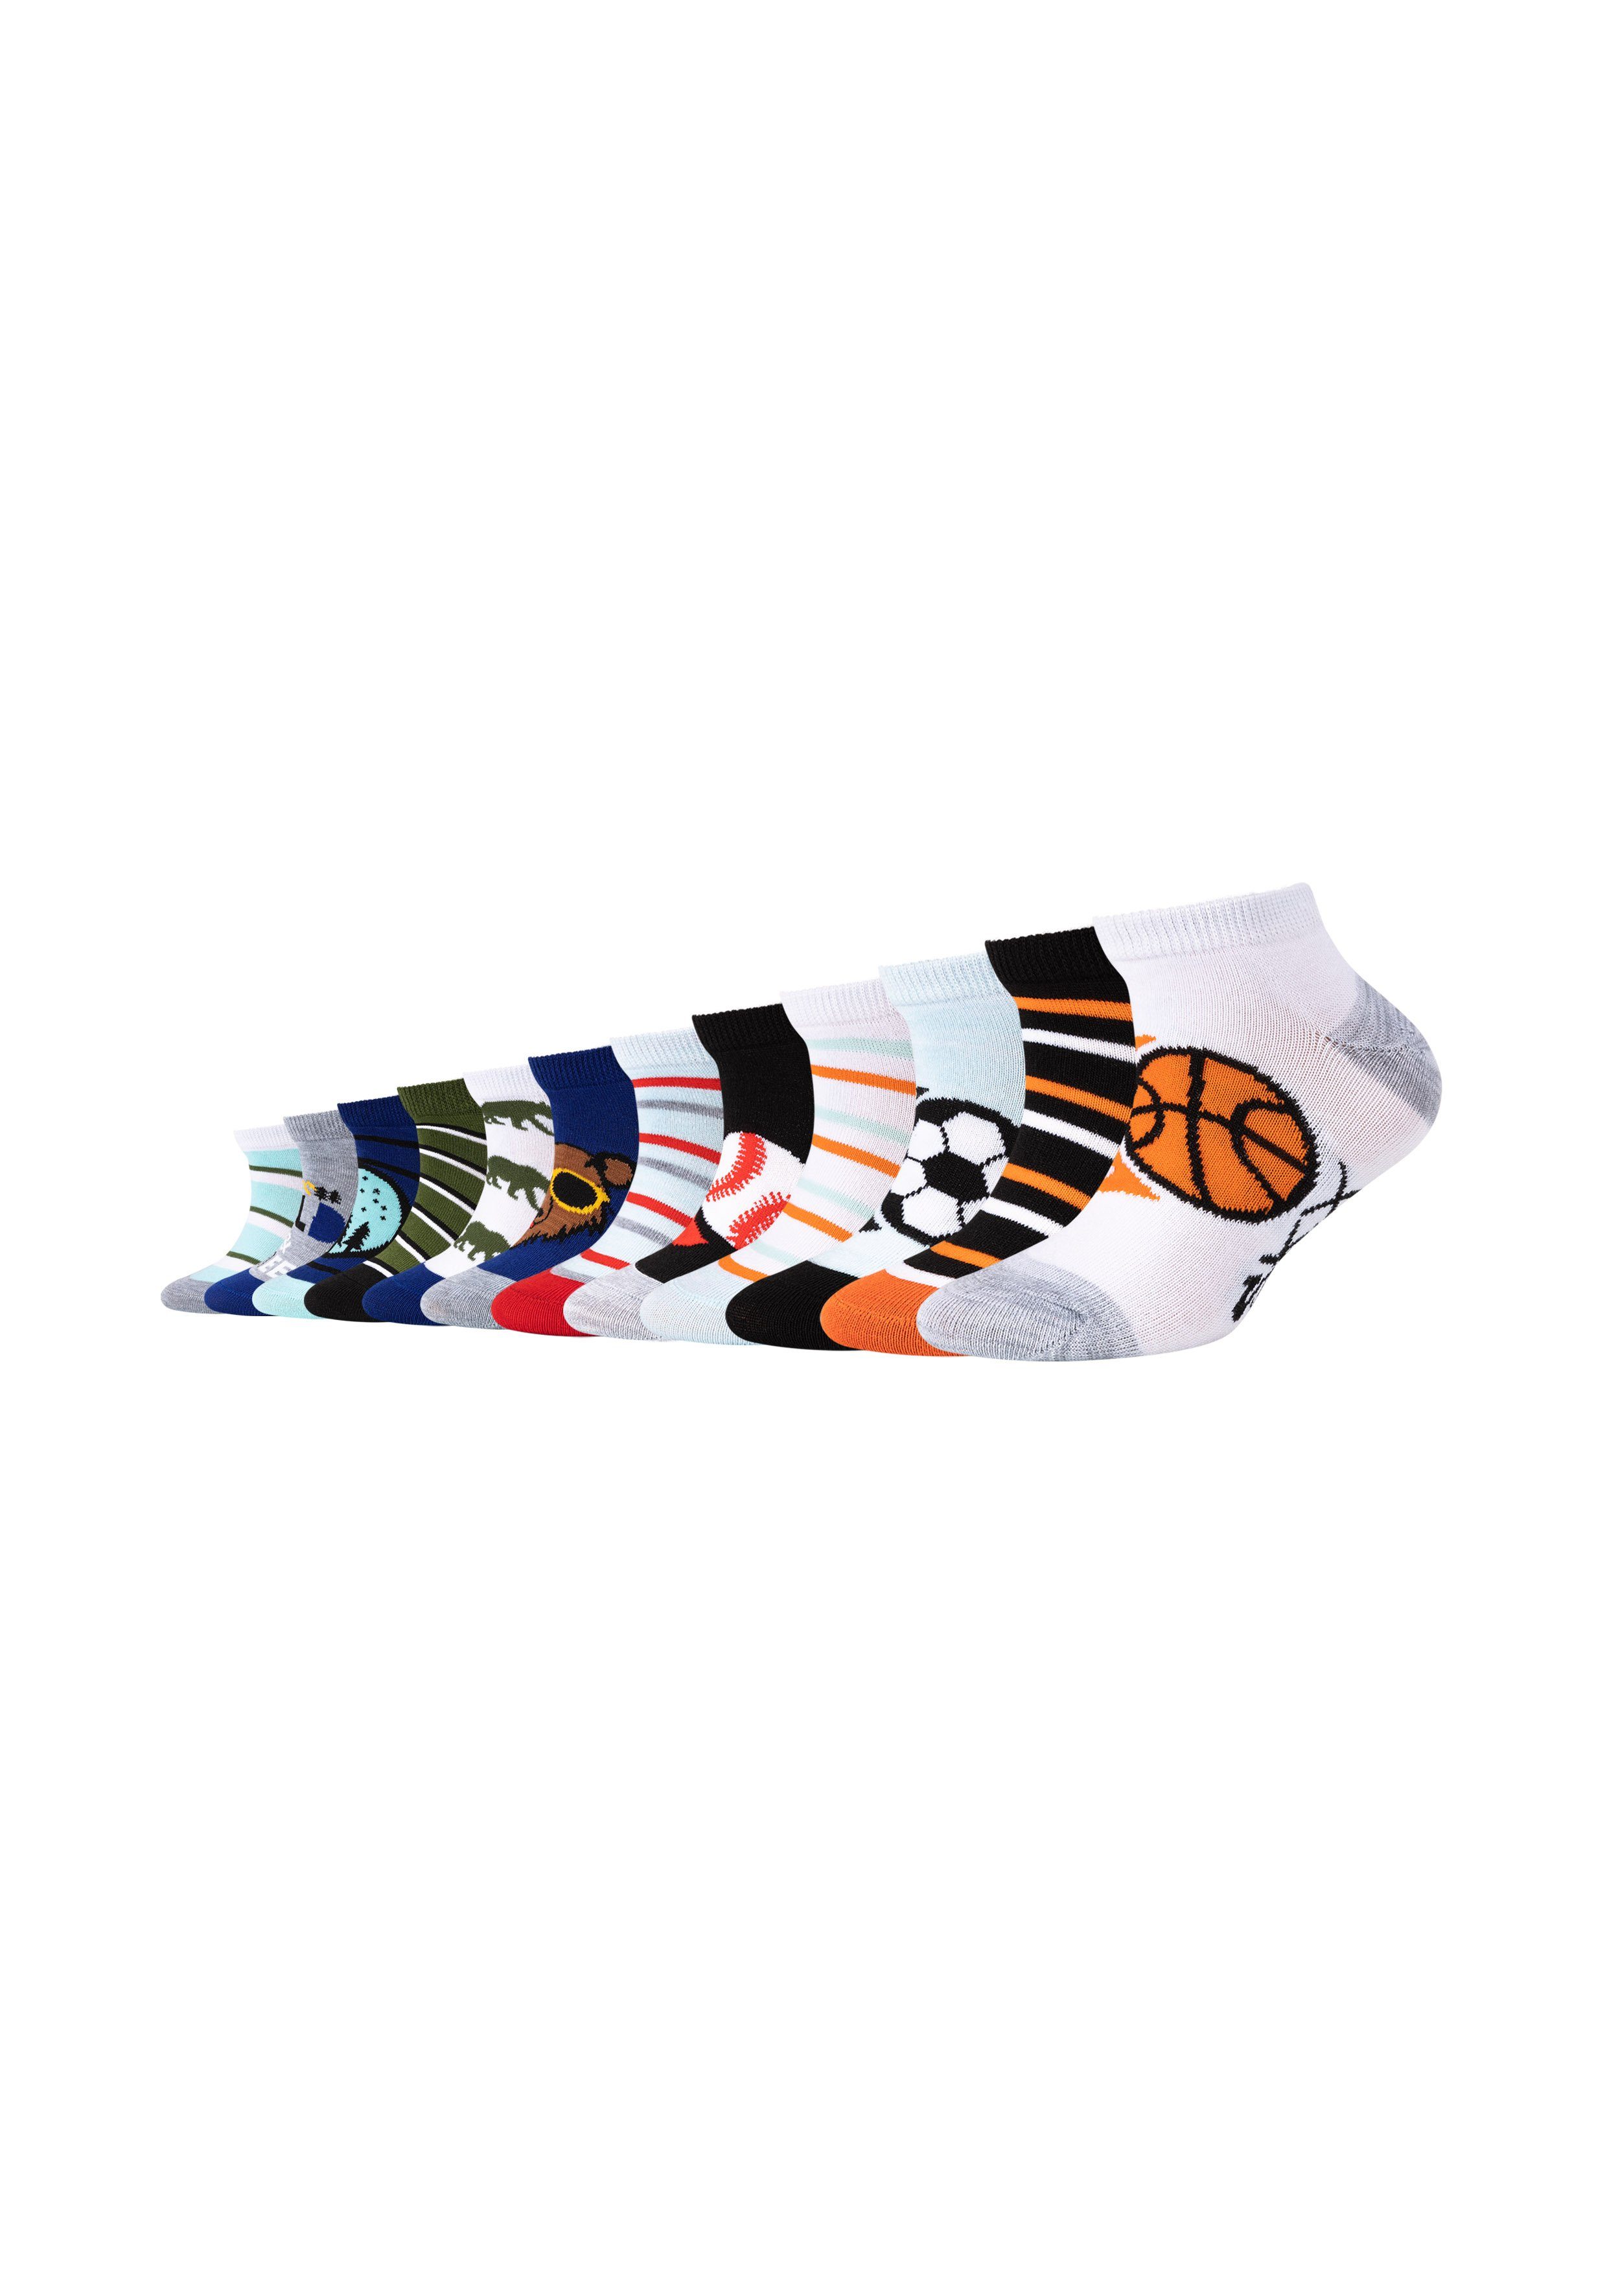 Wäsche/Bademode Socken Skechers Socken Casual Sportive (12-Paar) Mit sportlichen Motiven